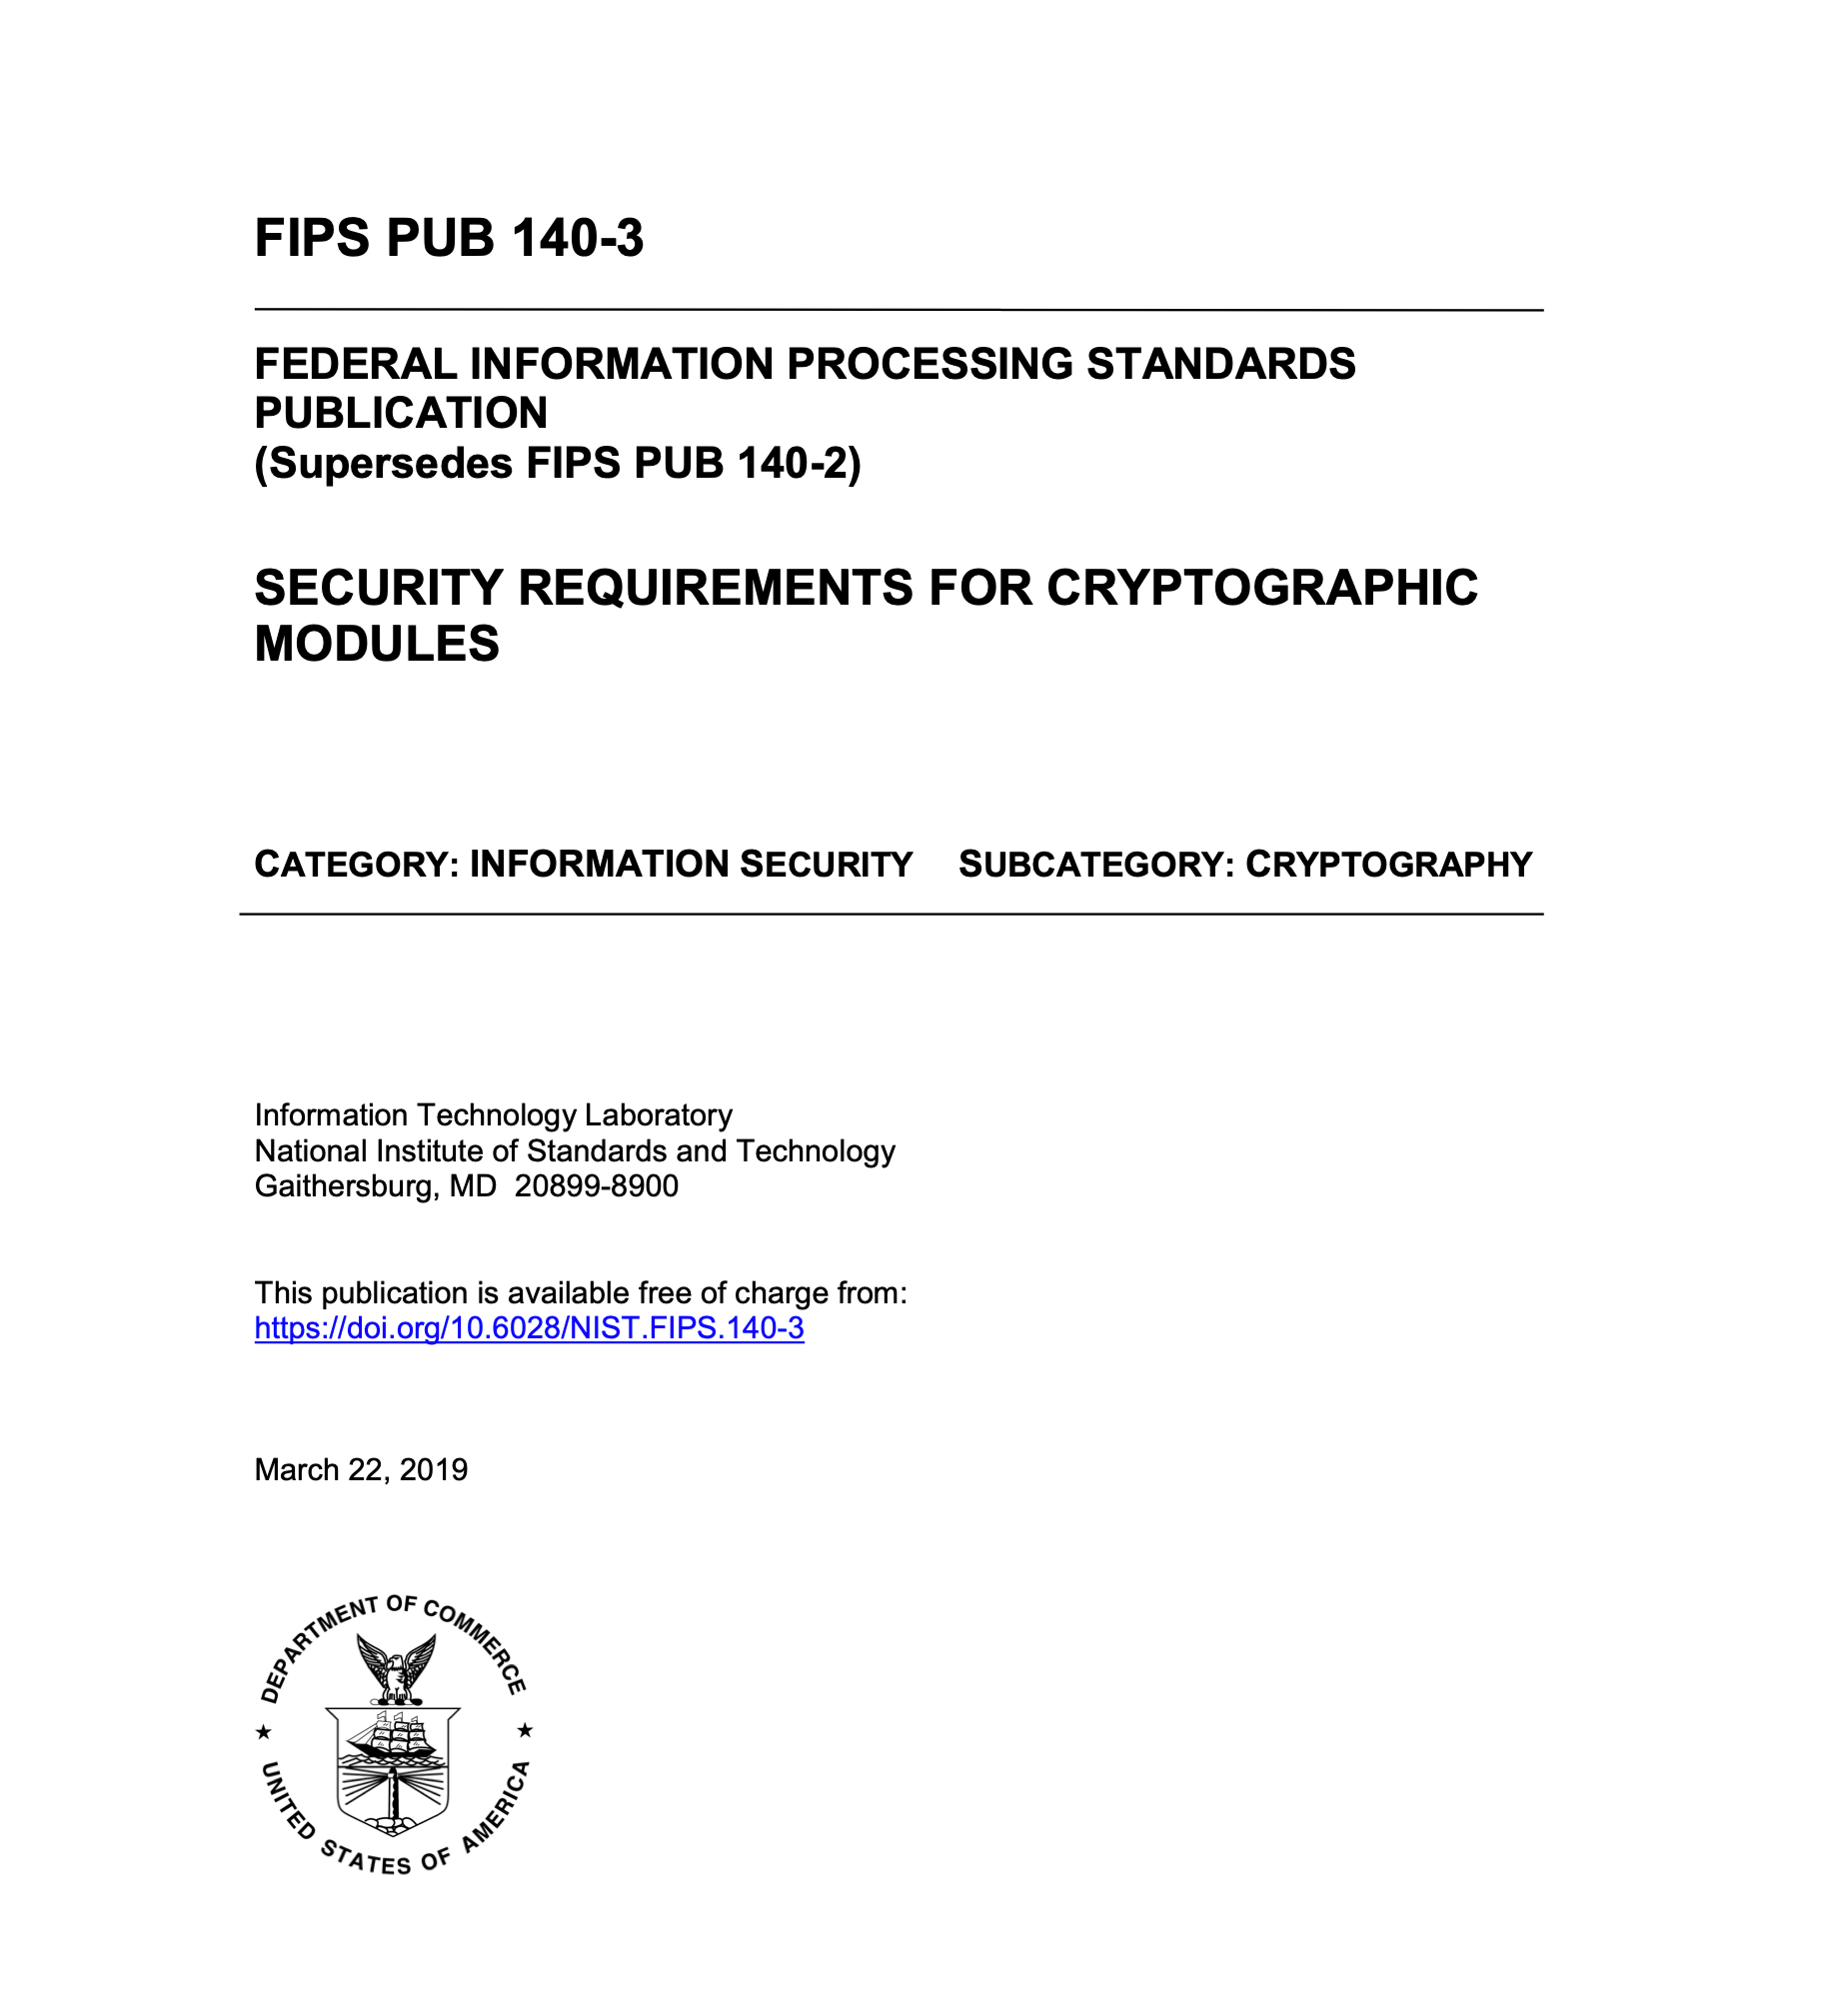 FIPS 140-3 Publication Coversheet